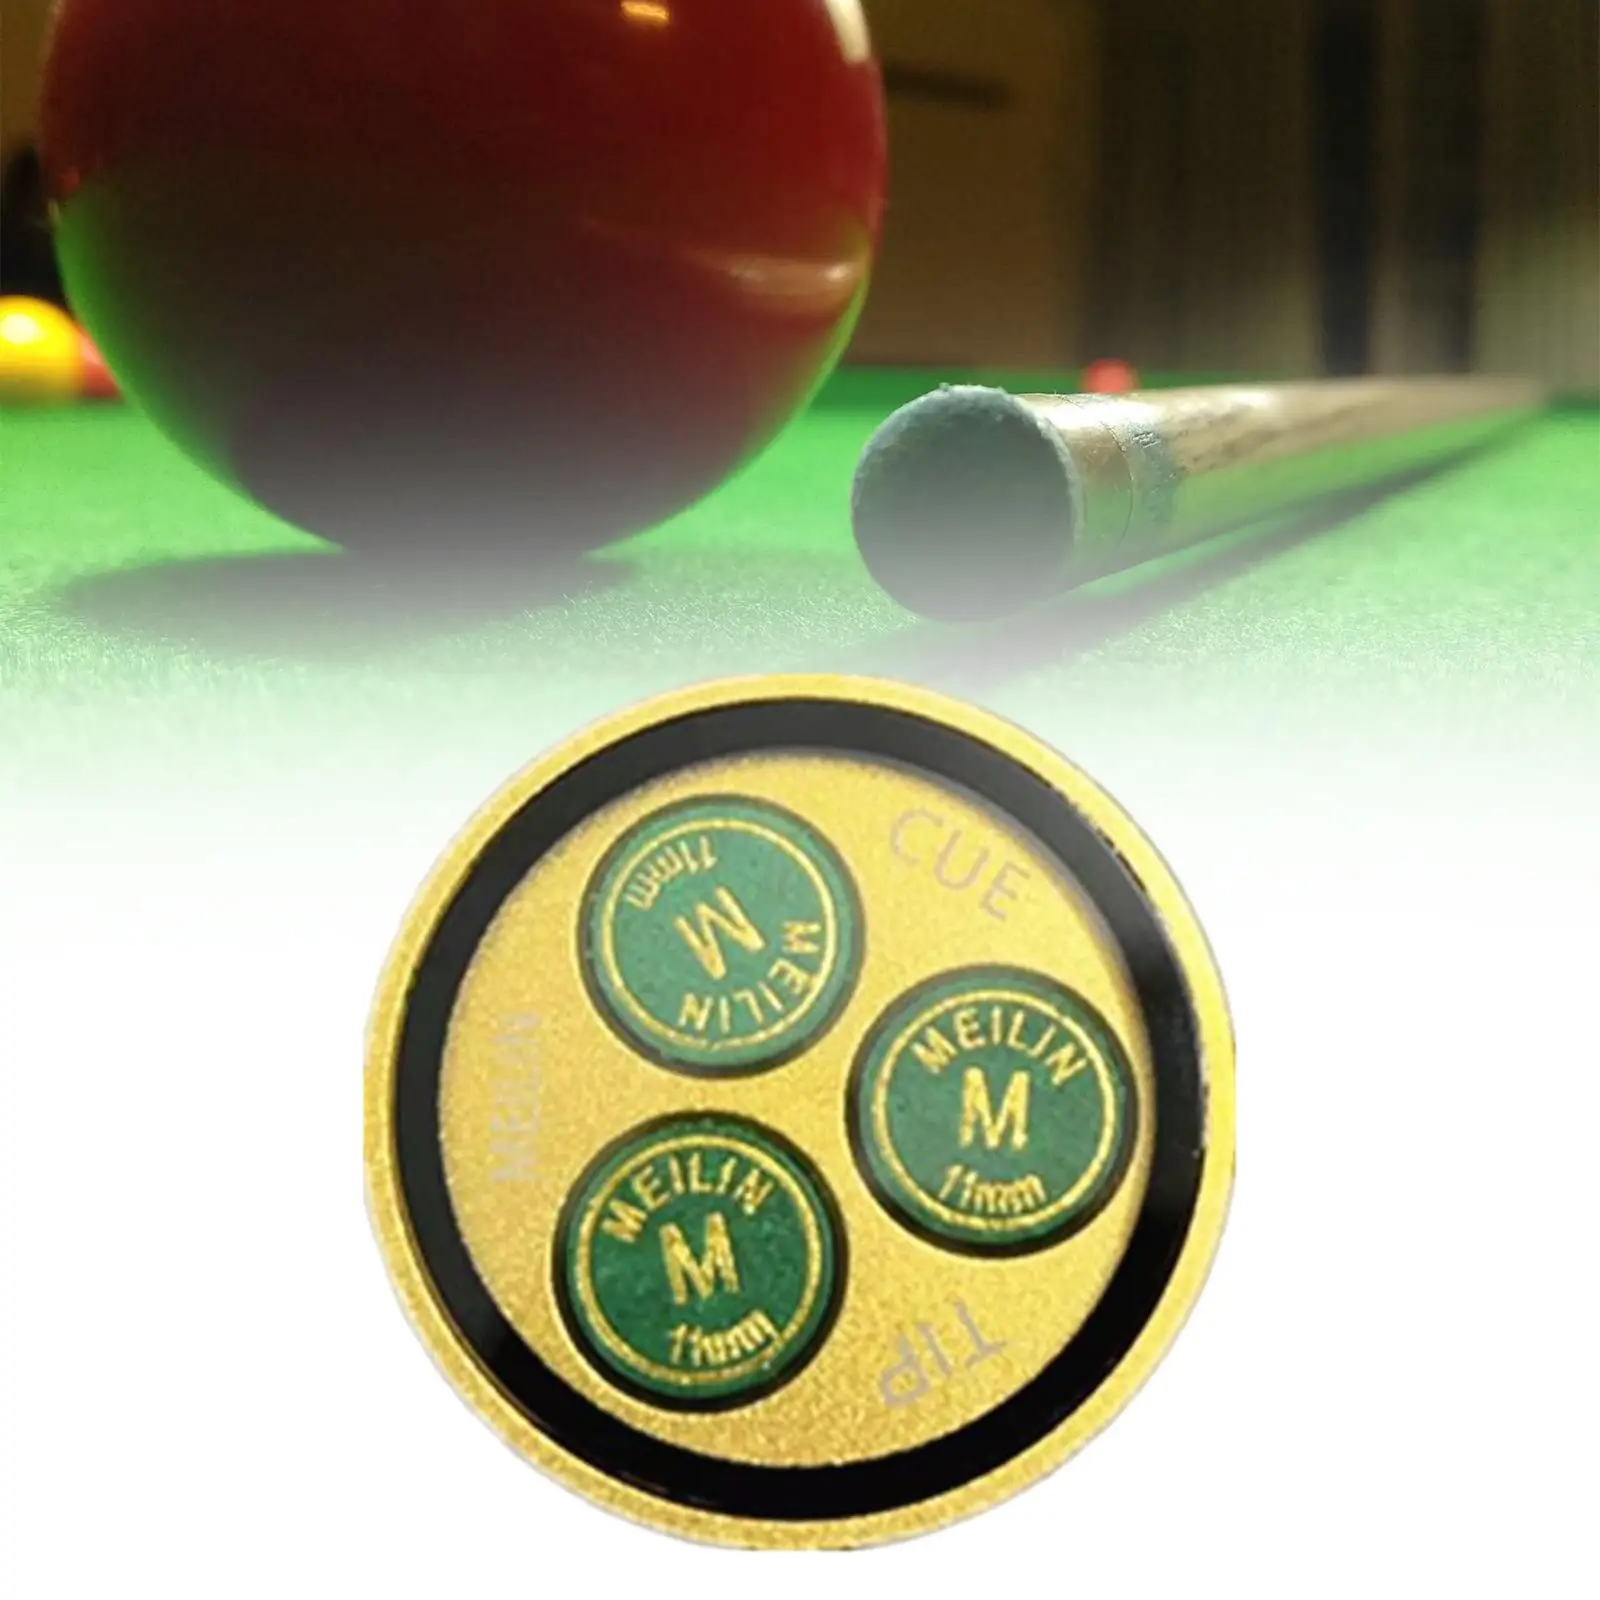 Snooker Stick Tips Billiard Accessories Practicing Durable Billiard Cue Tips